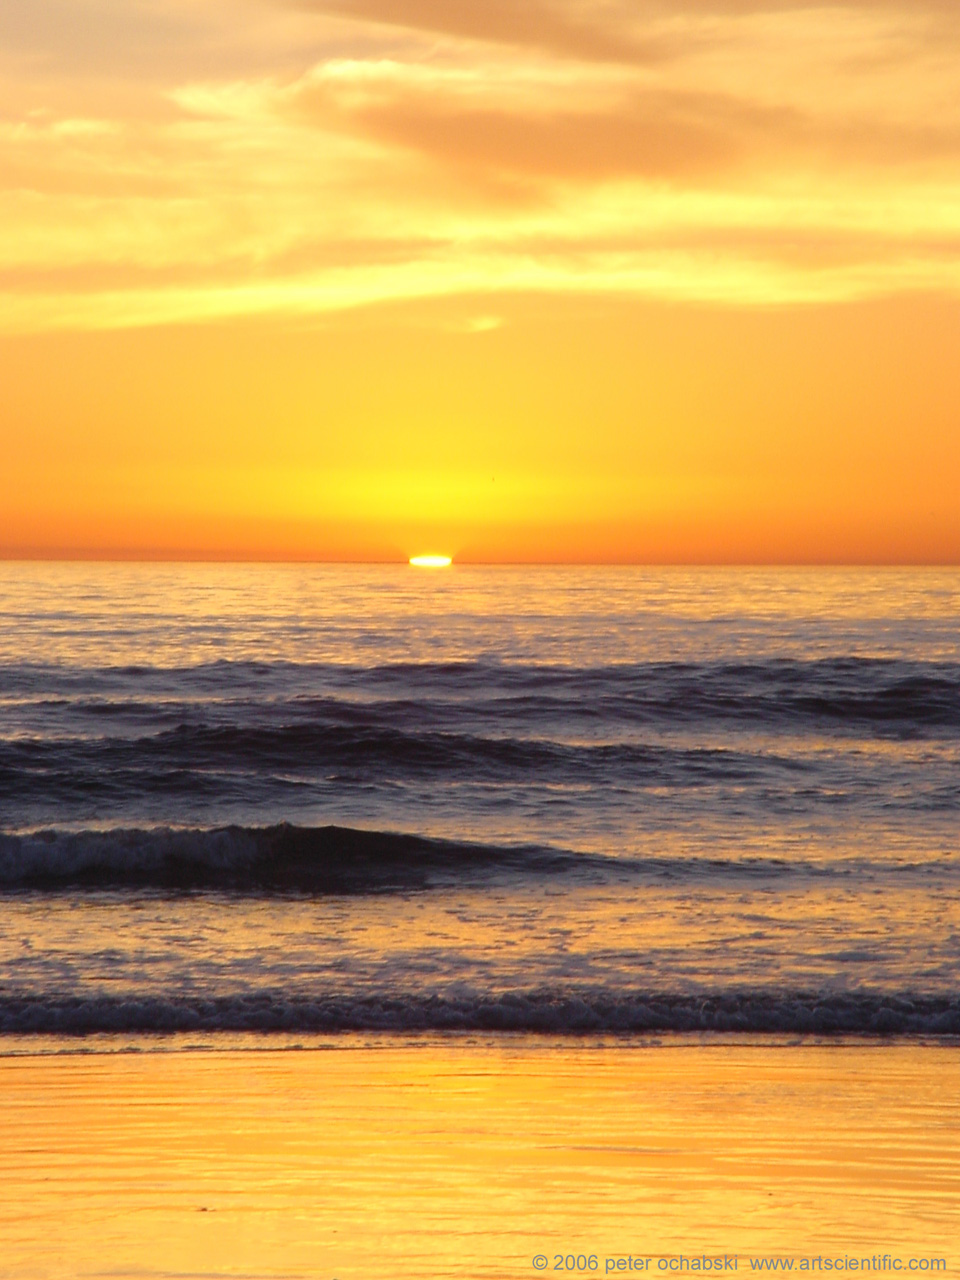 del mar beach sunset